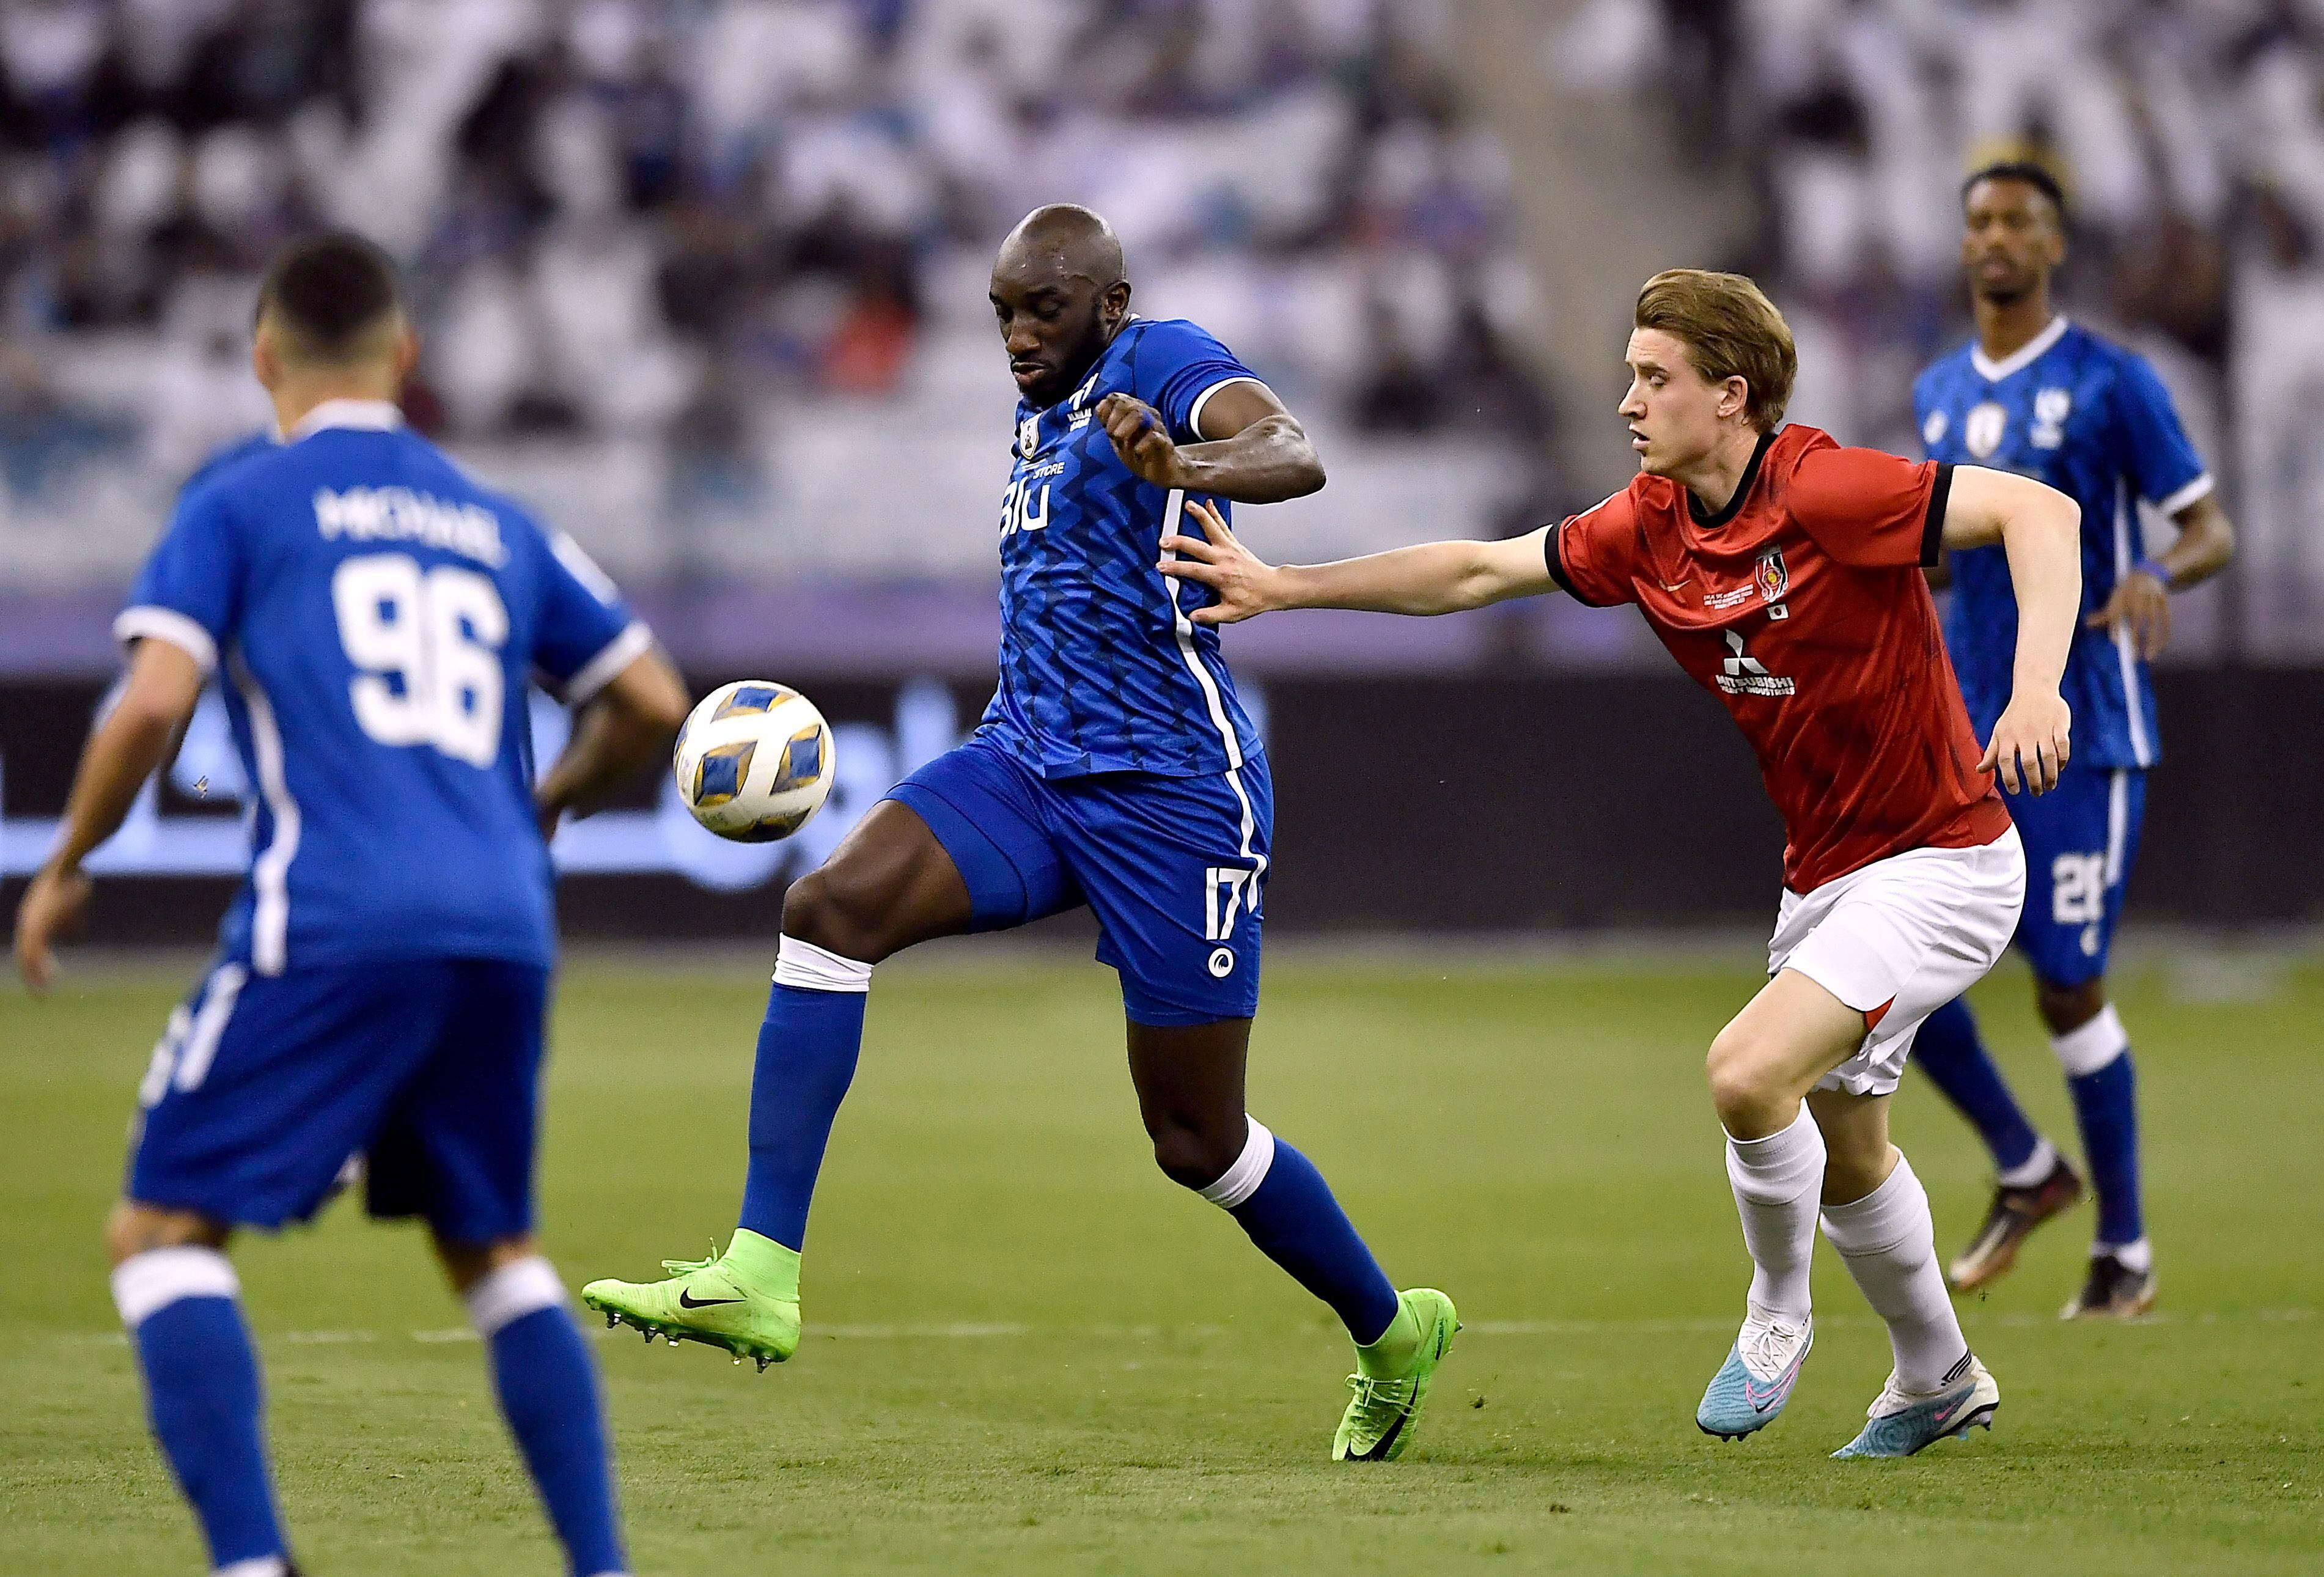 AFC Champions League giants Al Hilal and Urawa set for East vs